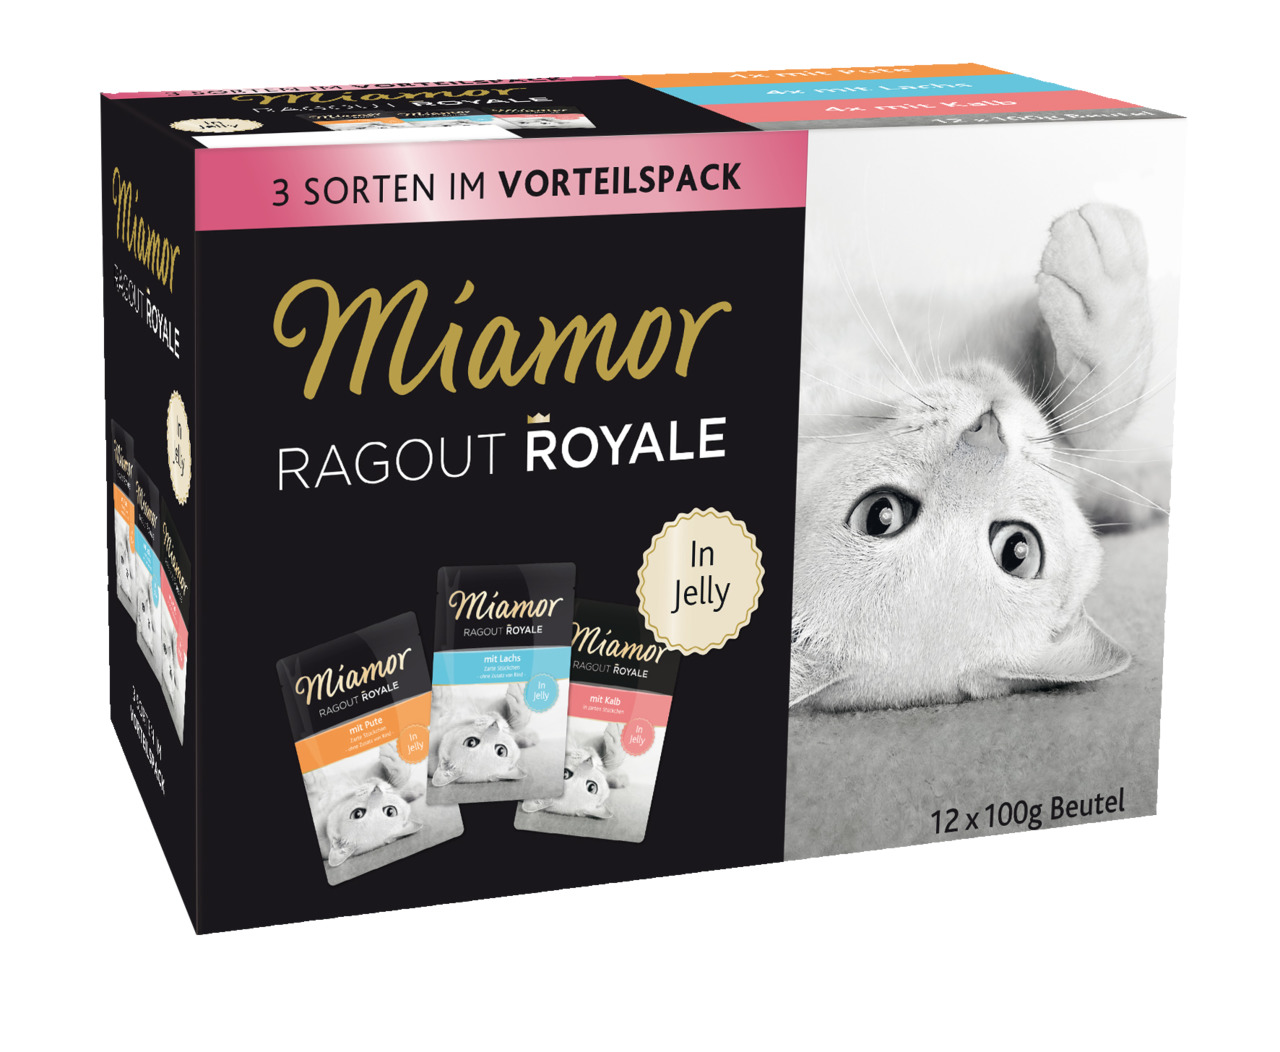 Miamor Ragout Royale in Jelly Multipack 2 Katzen Nassfutter 12 x 100 g